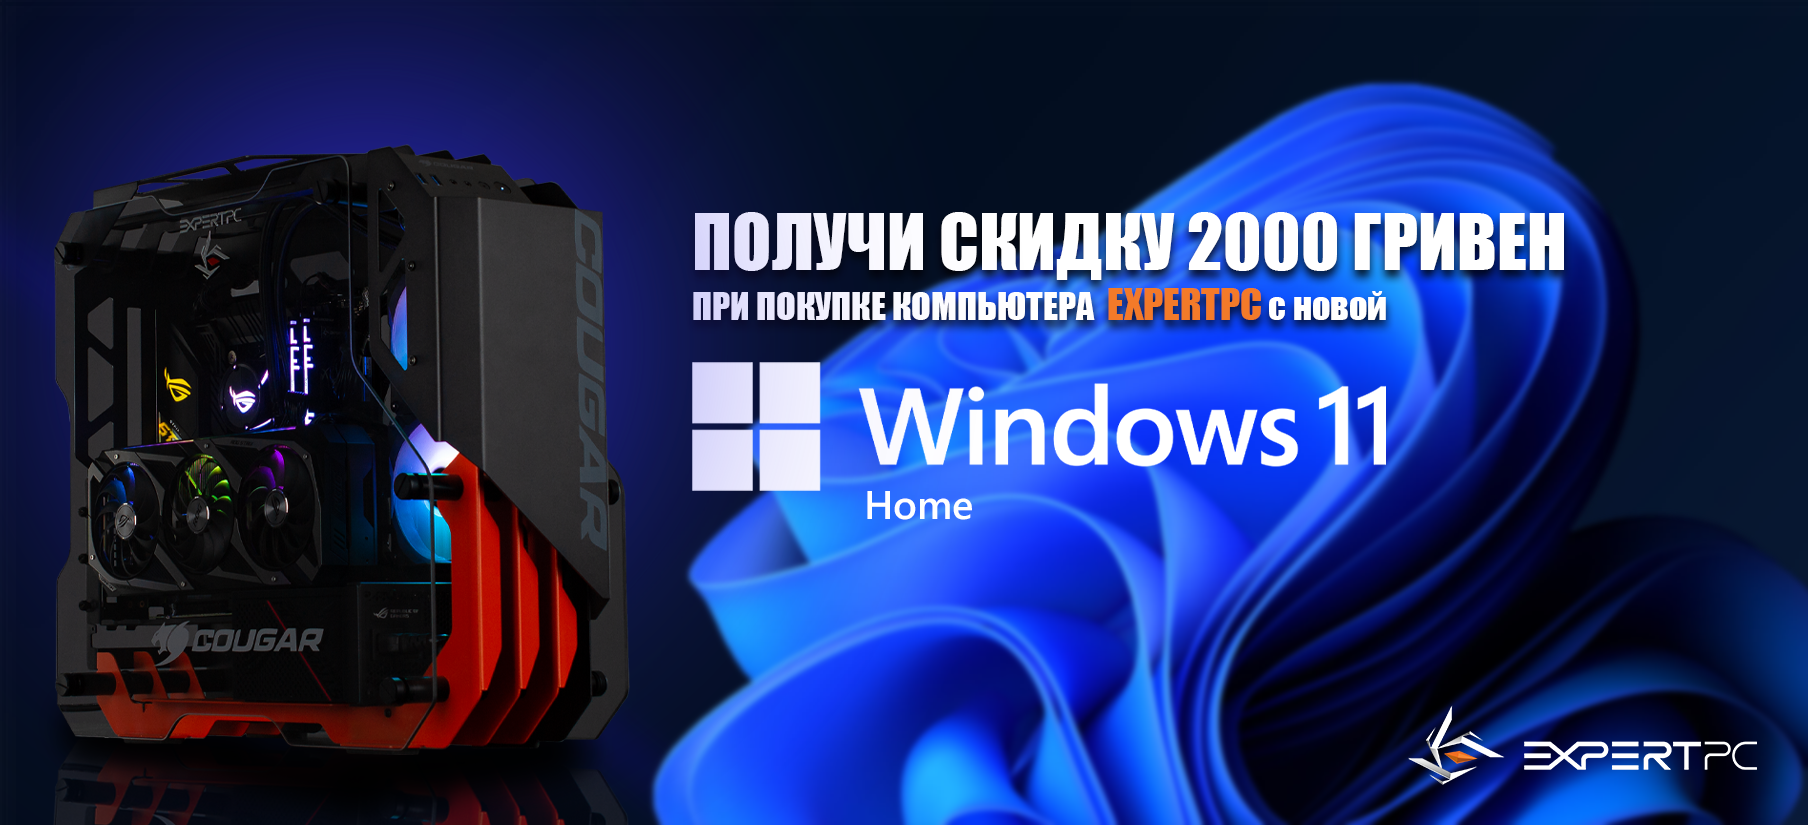 АКЦИЯ! - Windows 11 Home